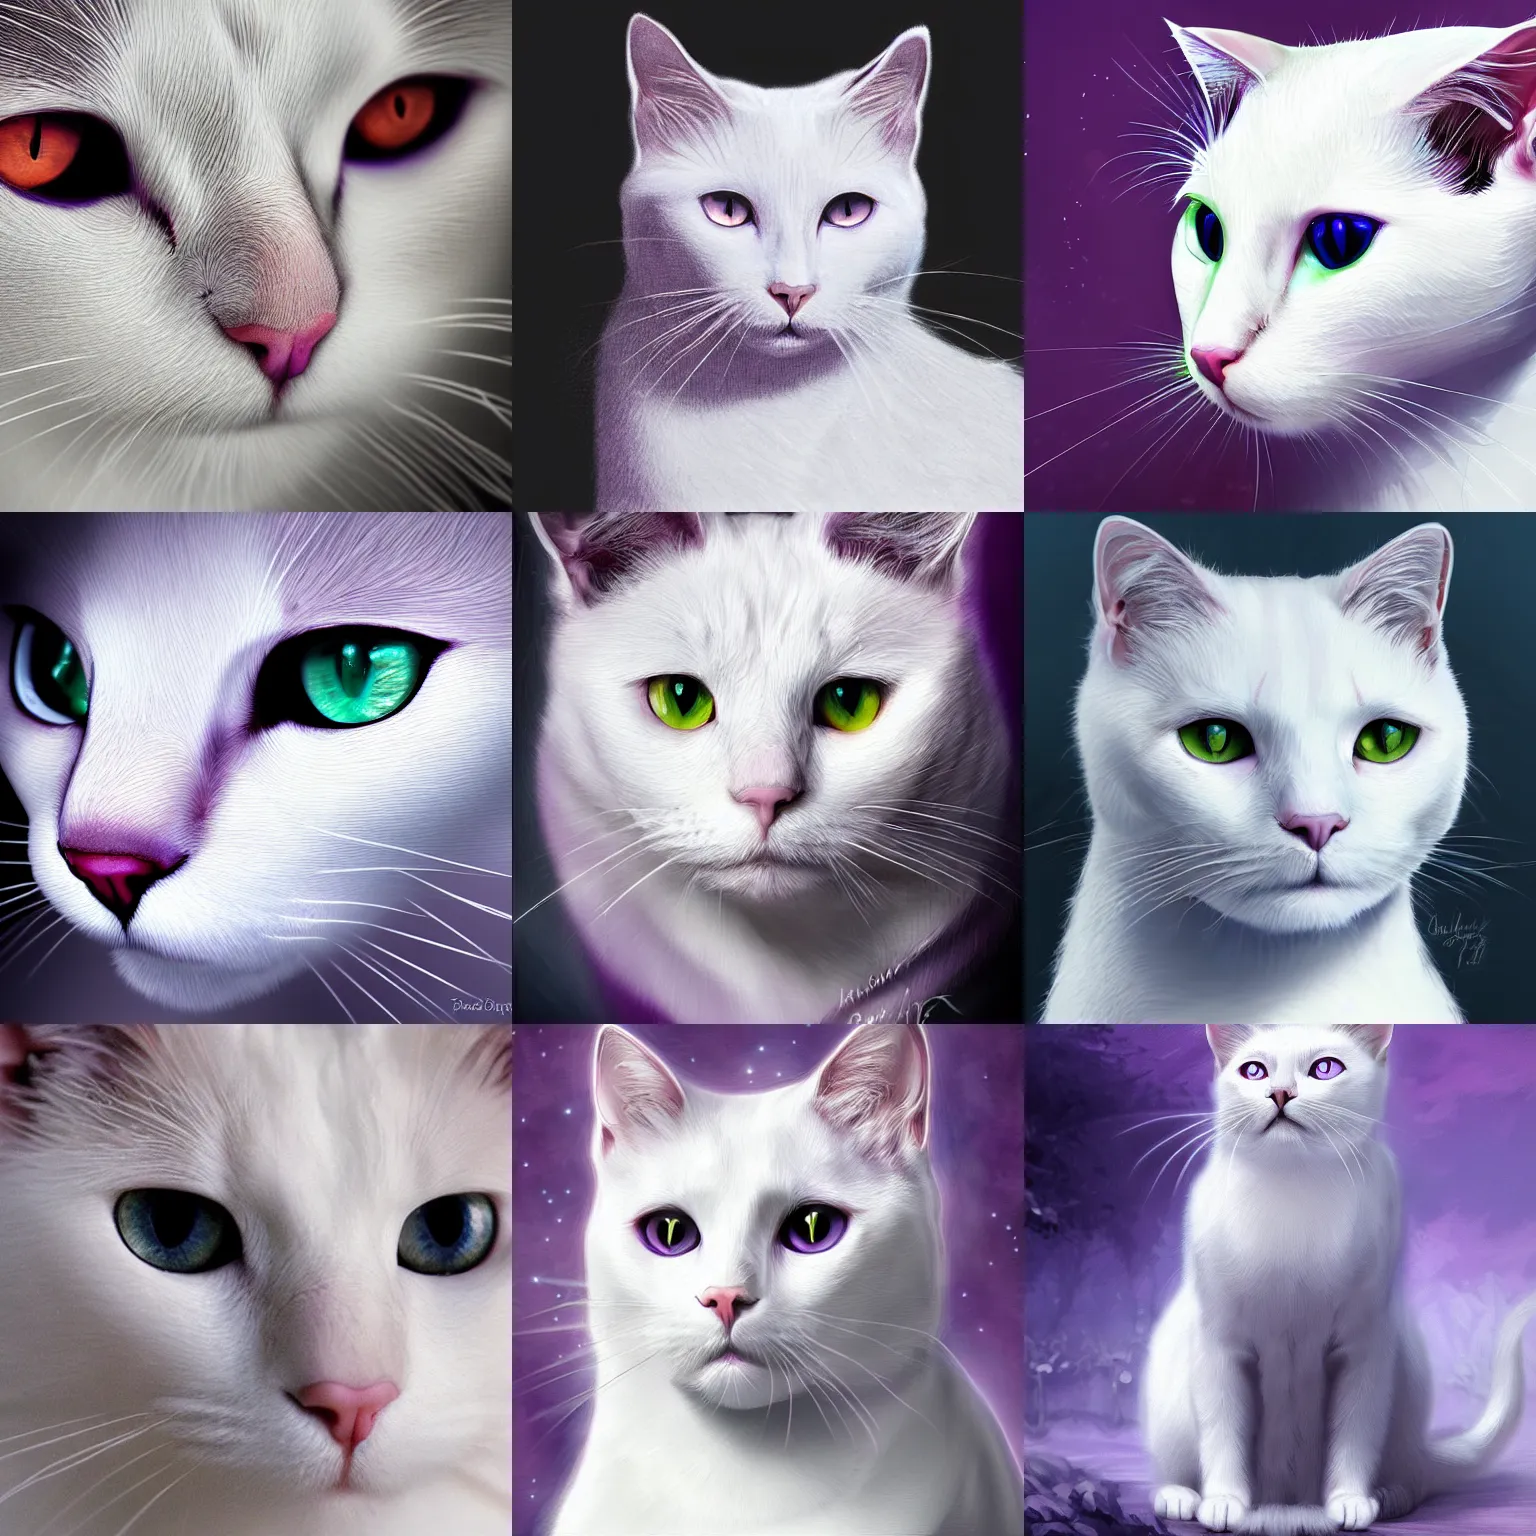 Prompt: Portrait of a white cat, purple eyes, noble, fantasy, digital art, HD, detailed.